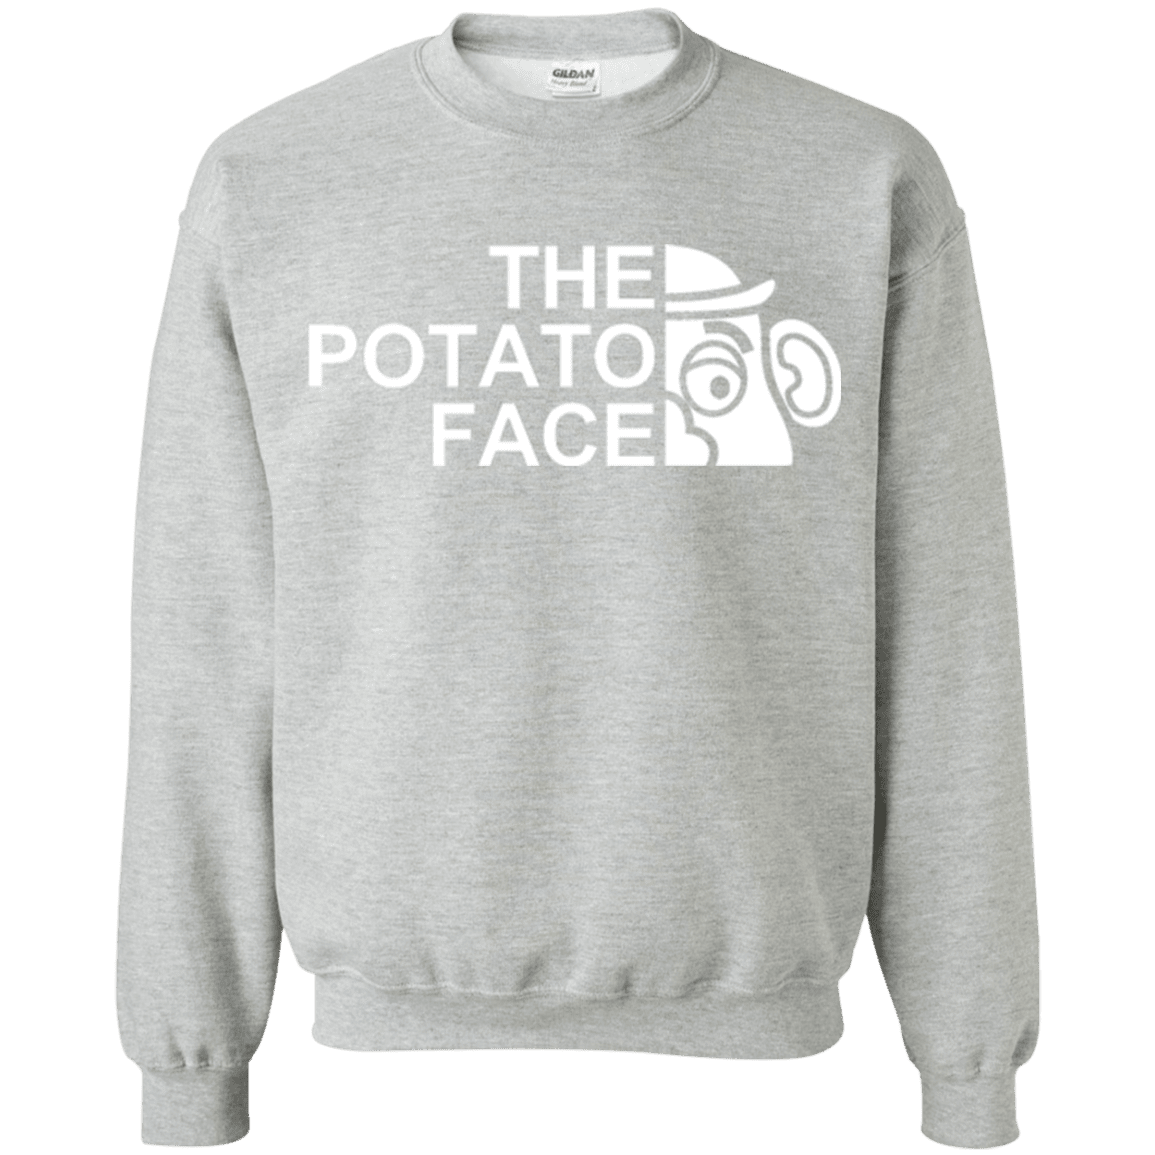 Sweatshirts Sport Grey / Small The Potato Face Crewneck Sweatshirt